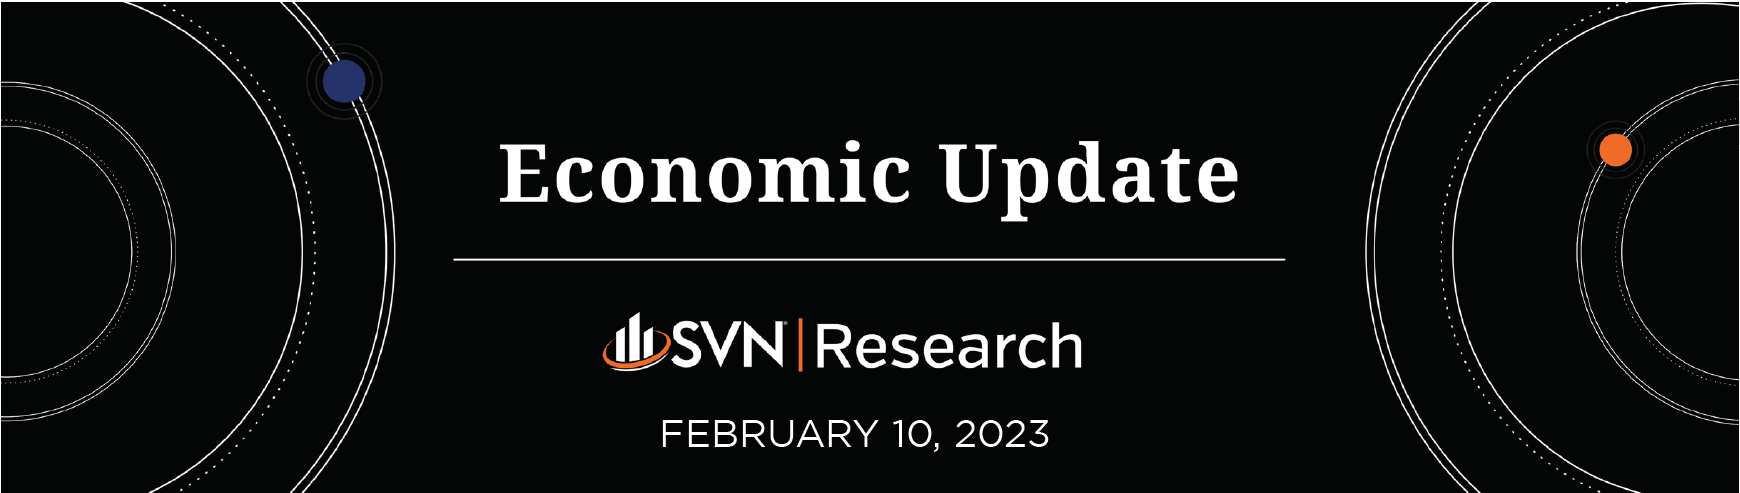 SVN | Research Economic Update 02.10.2023